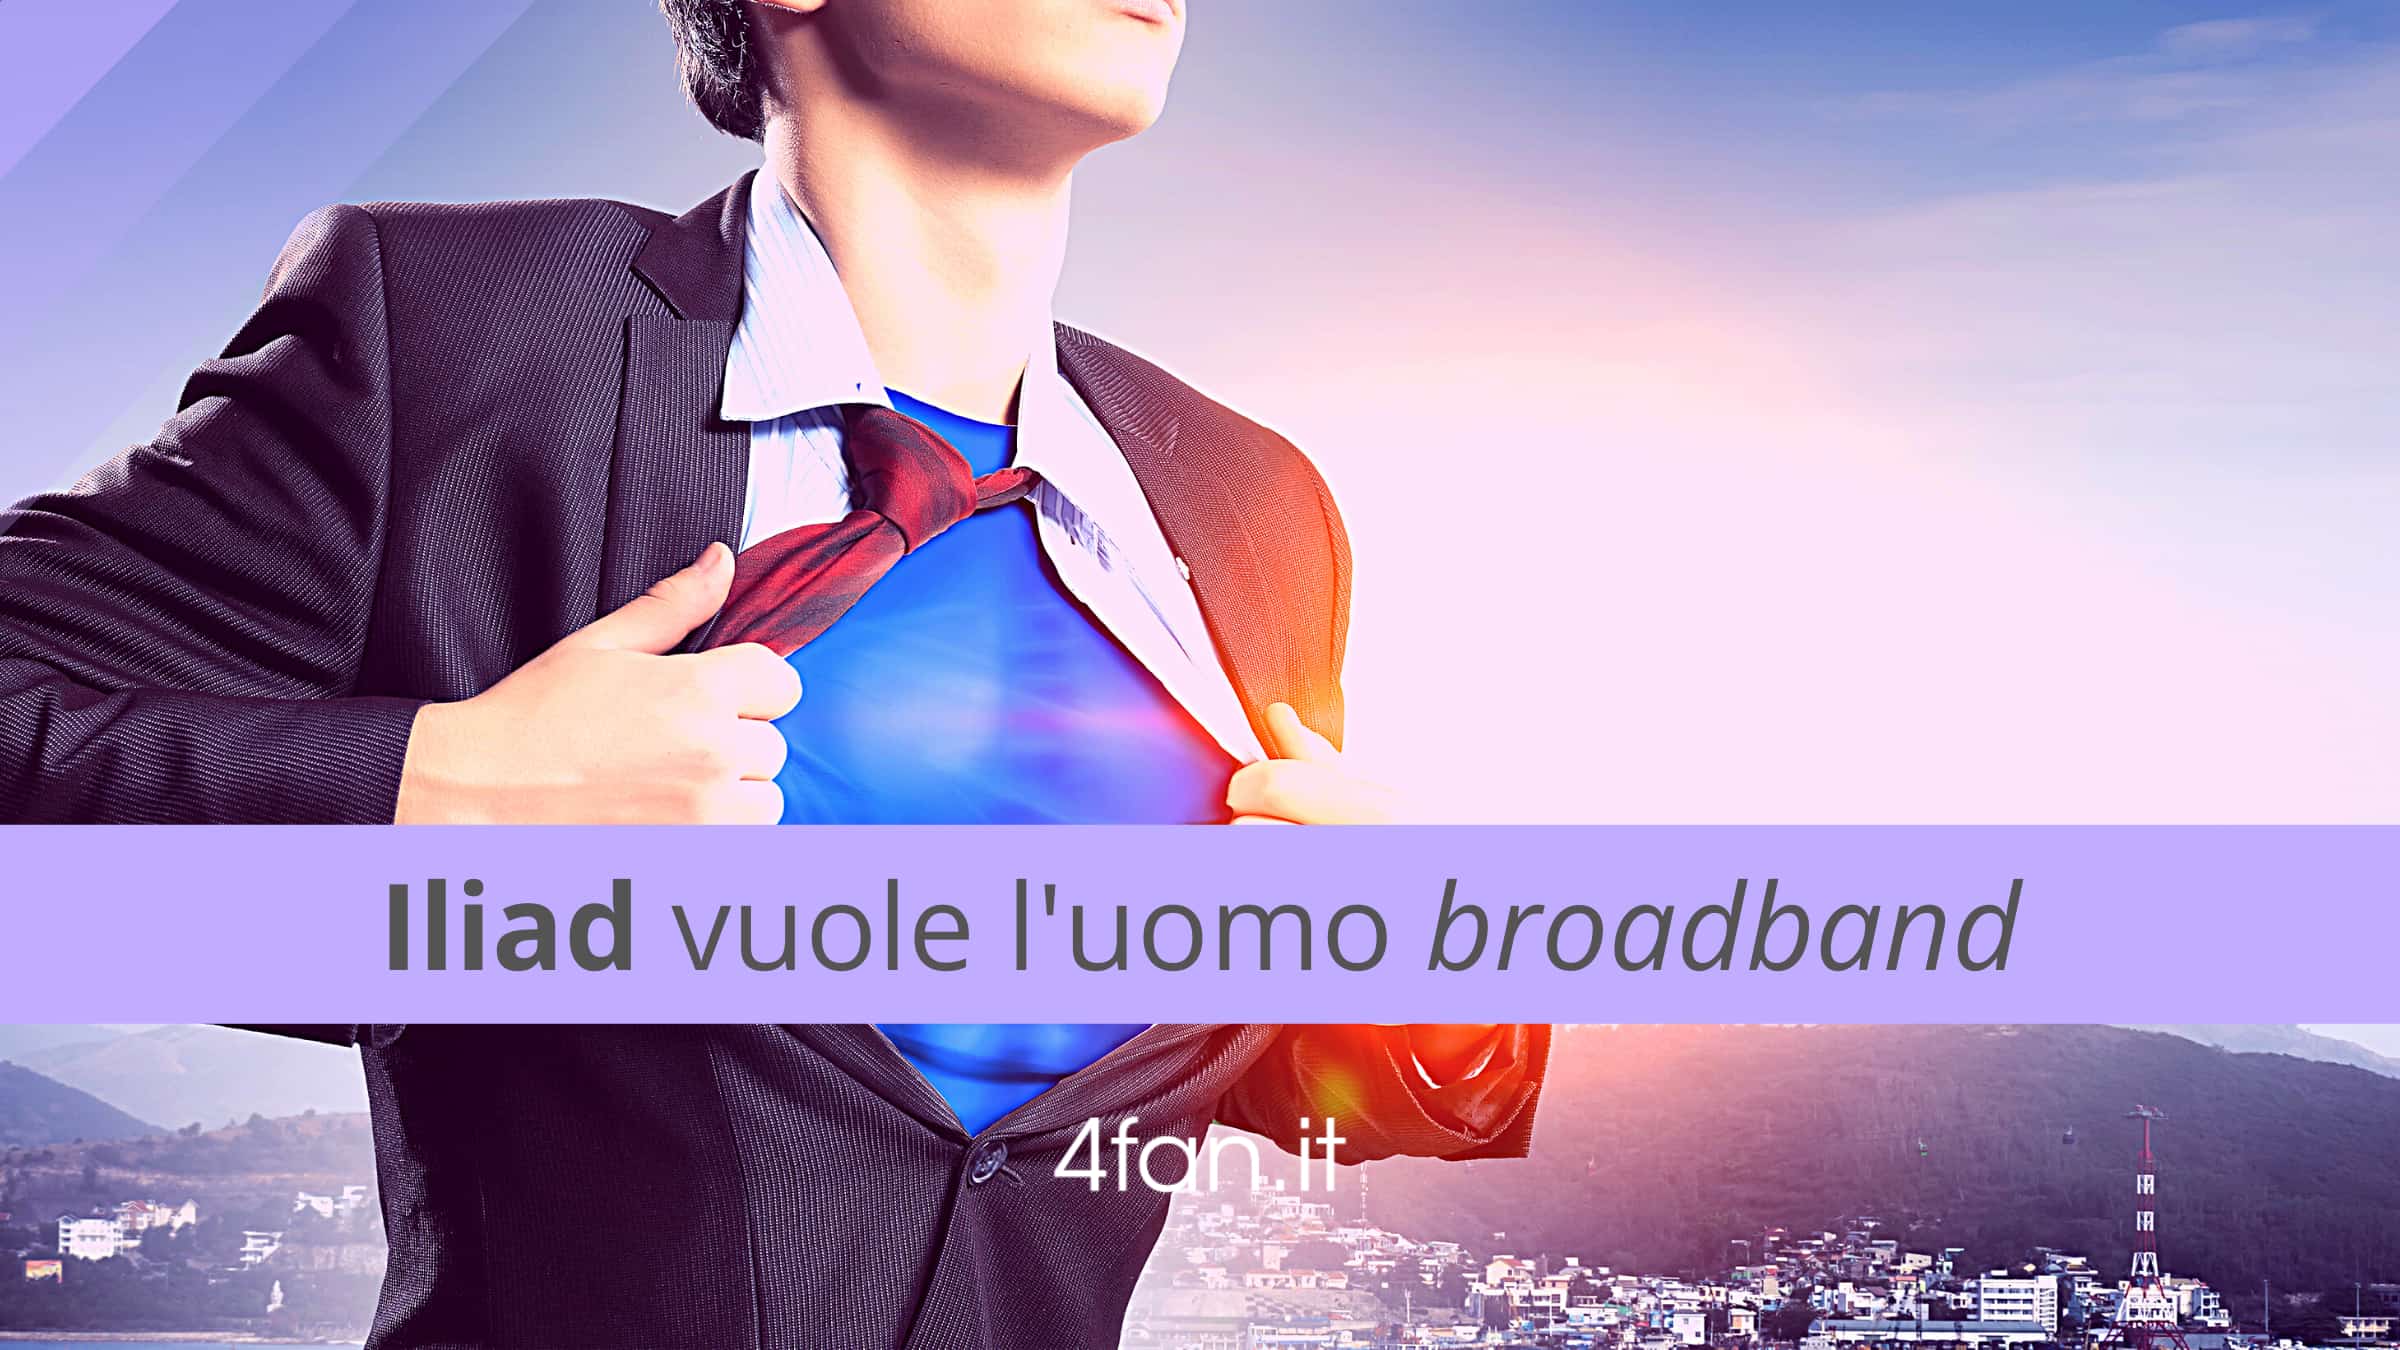 Iliad uomo broadband